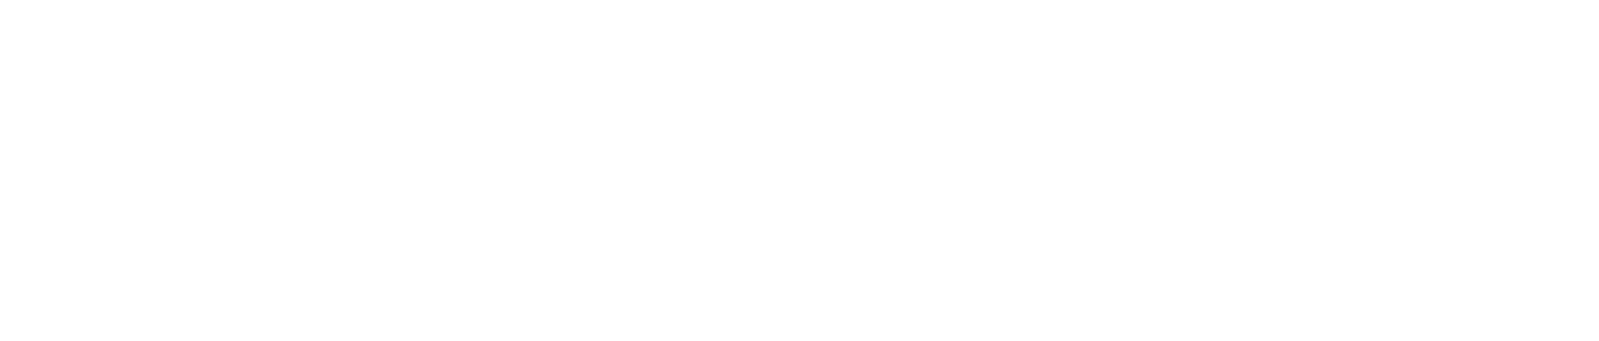 Getnet logo grand pour les fonds sombres (PNG transparent)